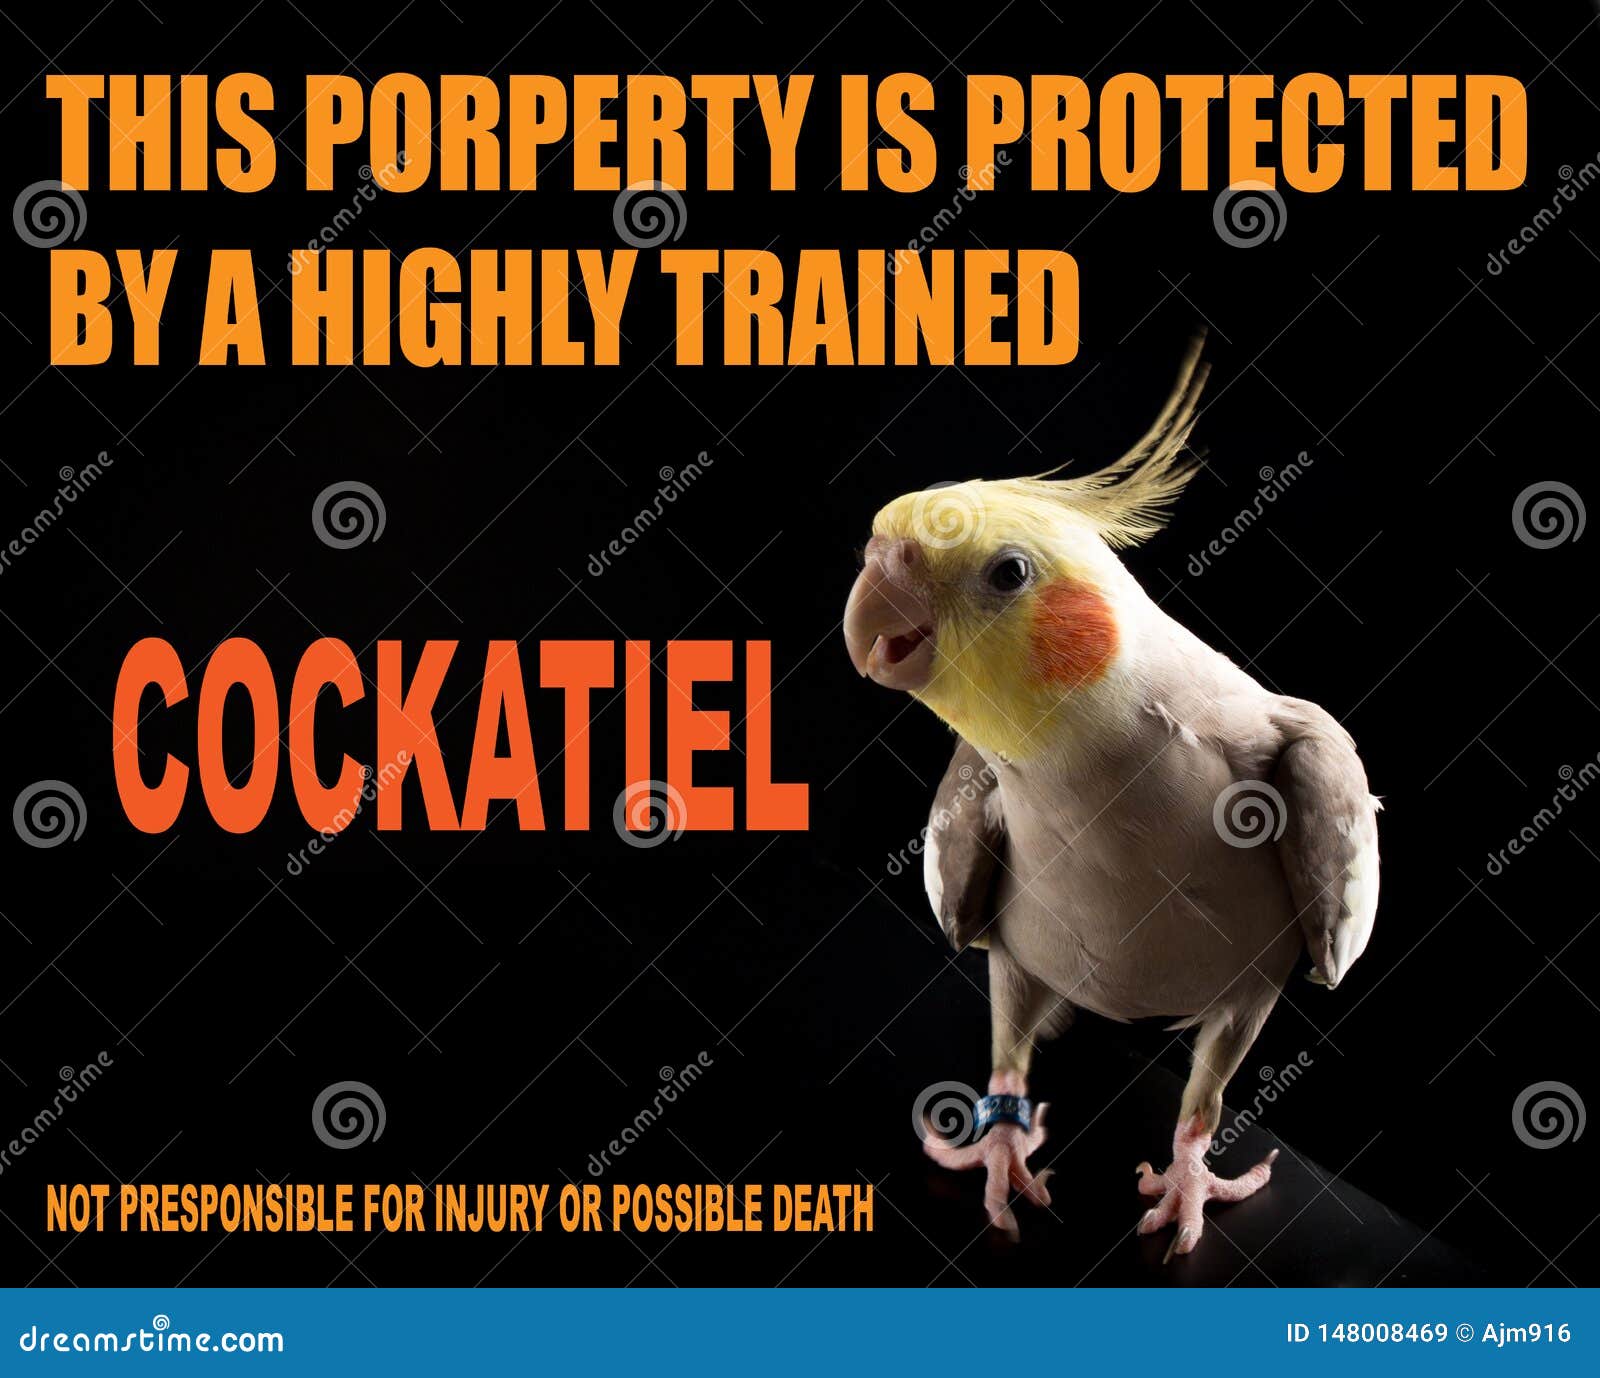 Funny Bird Memes, Cute Dangerous Pet Warnings Stock Image Image Of Food,  Parakeet: 225954605 | Colegioclubuniversitario.Edu.Ar